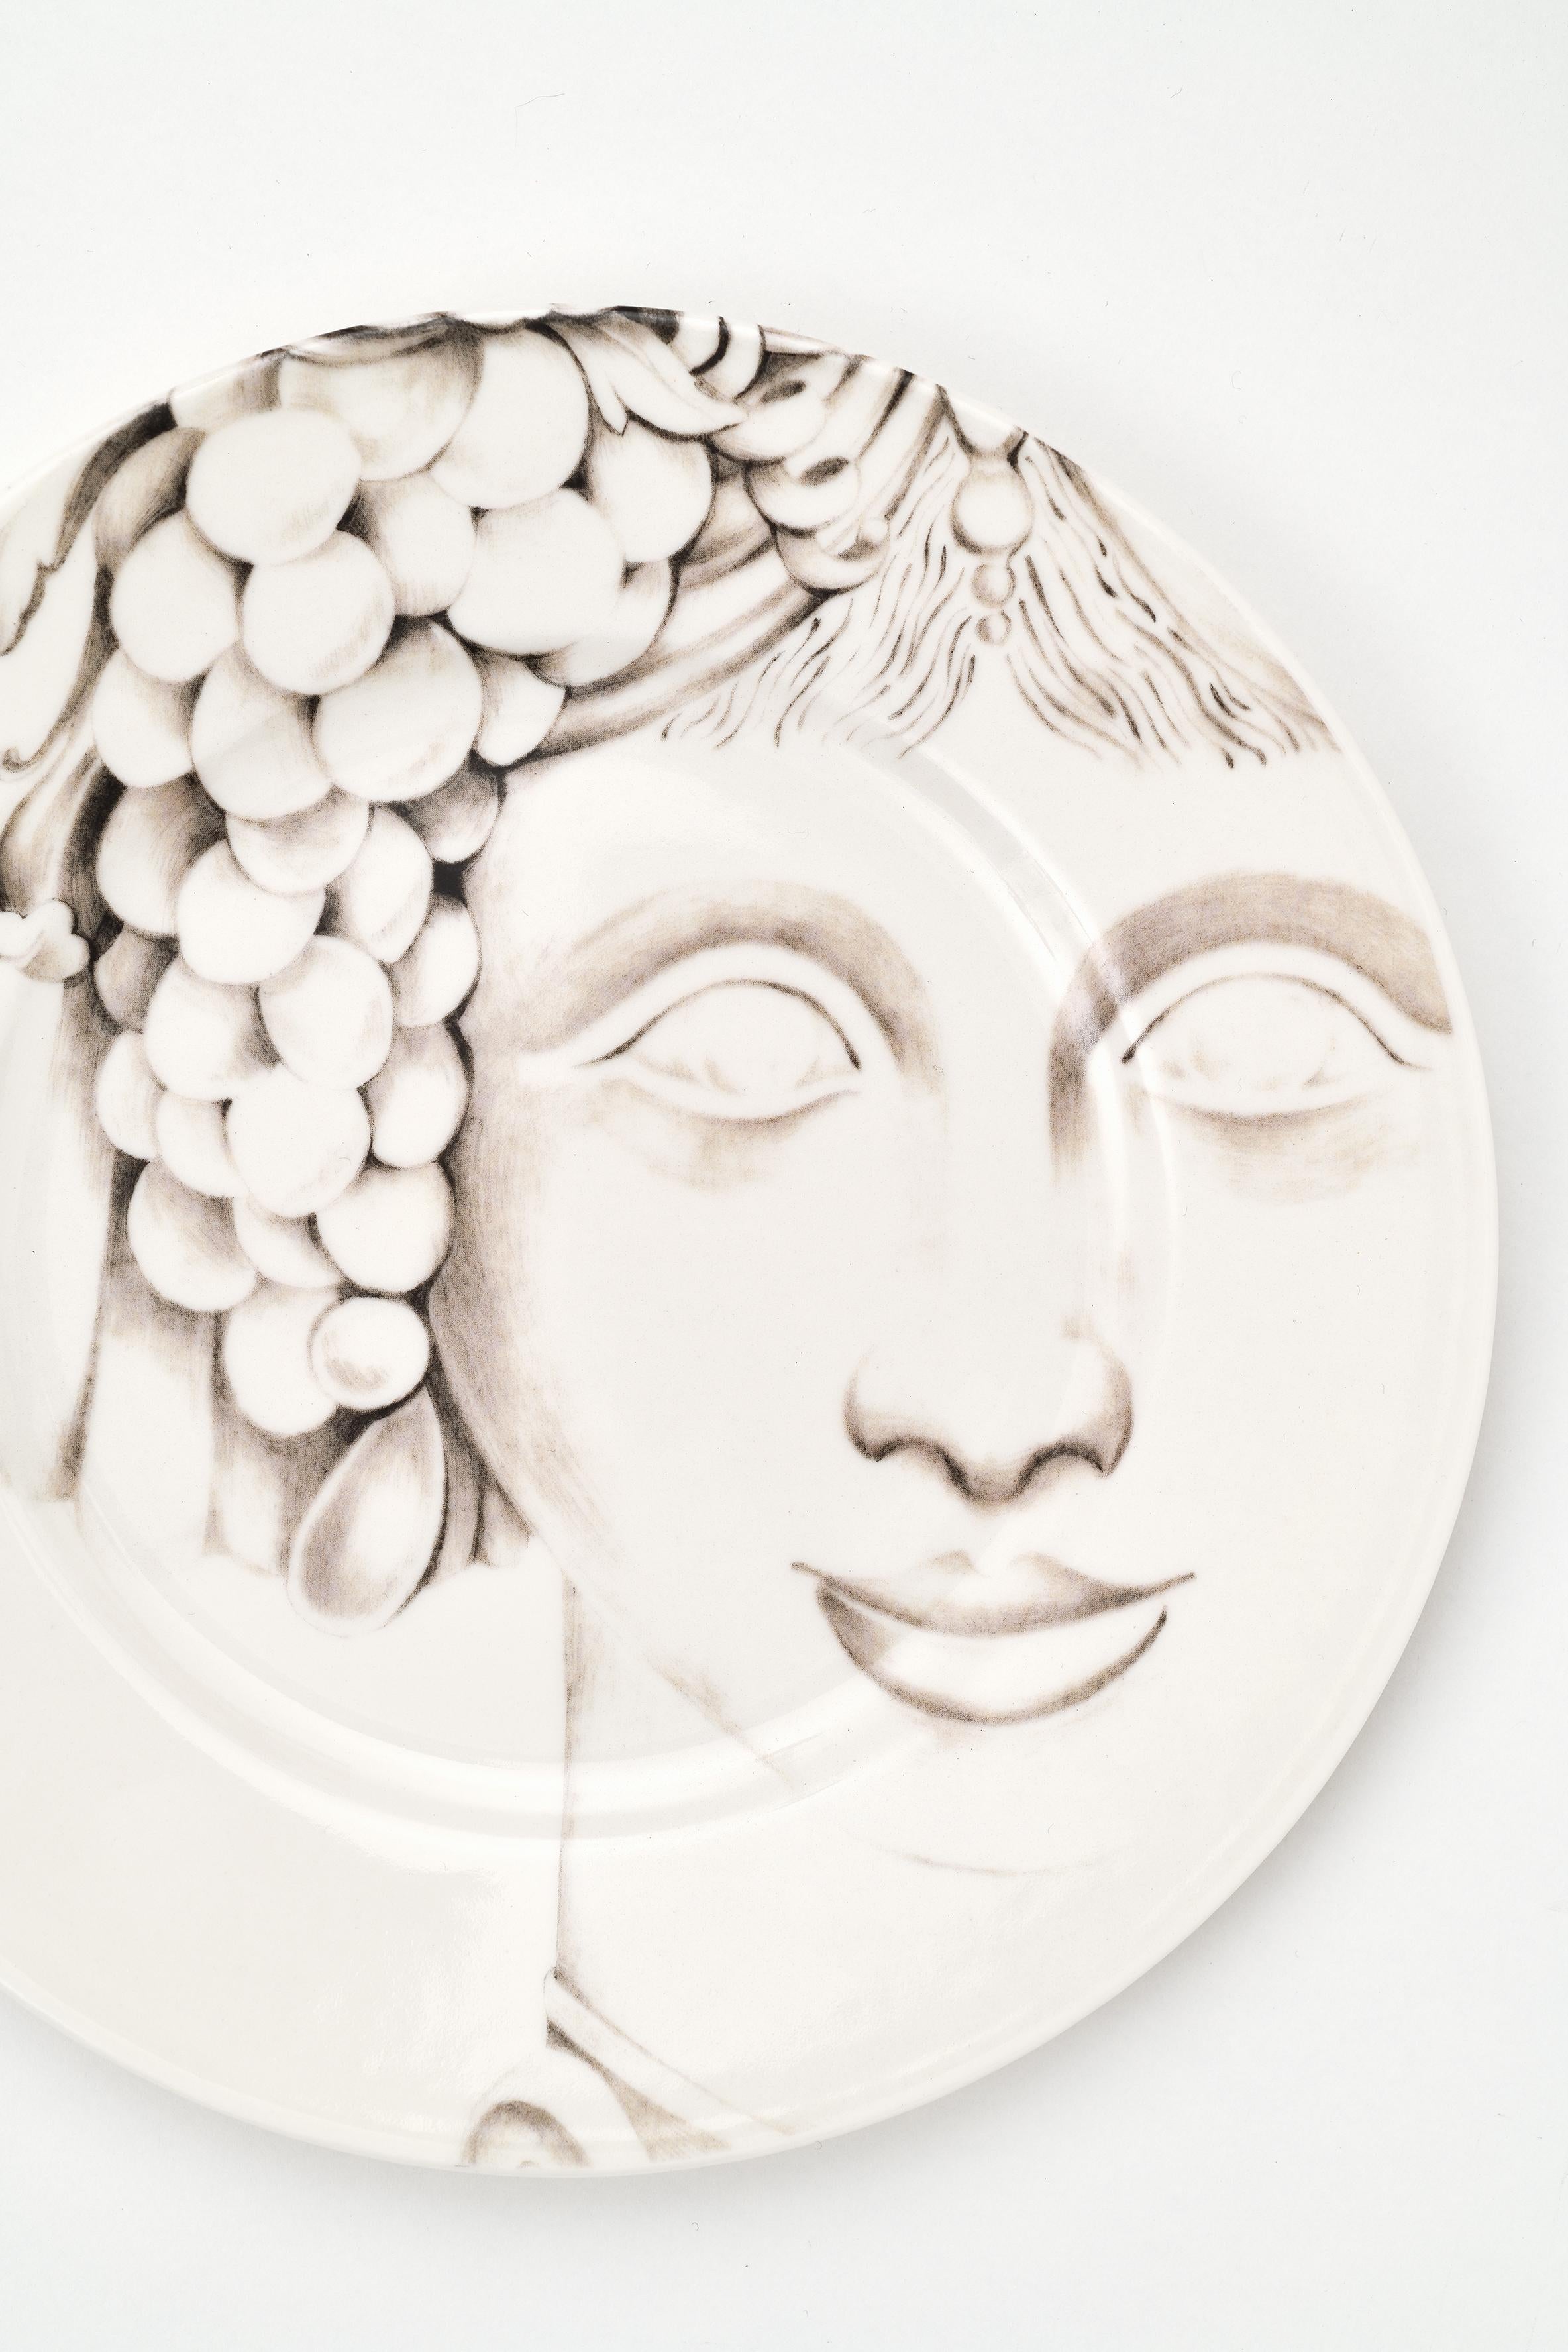 Italian Teste di Moro, Collection in Soft Grey, Contemporary Porcelain Dessert Plate For Sale